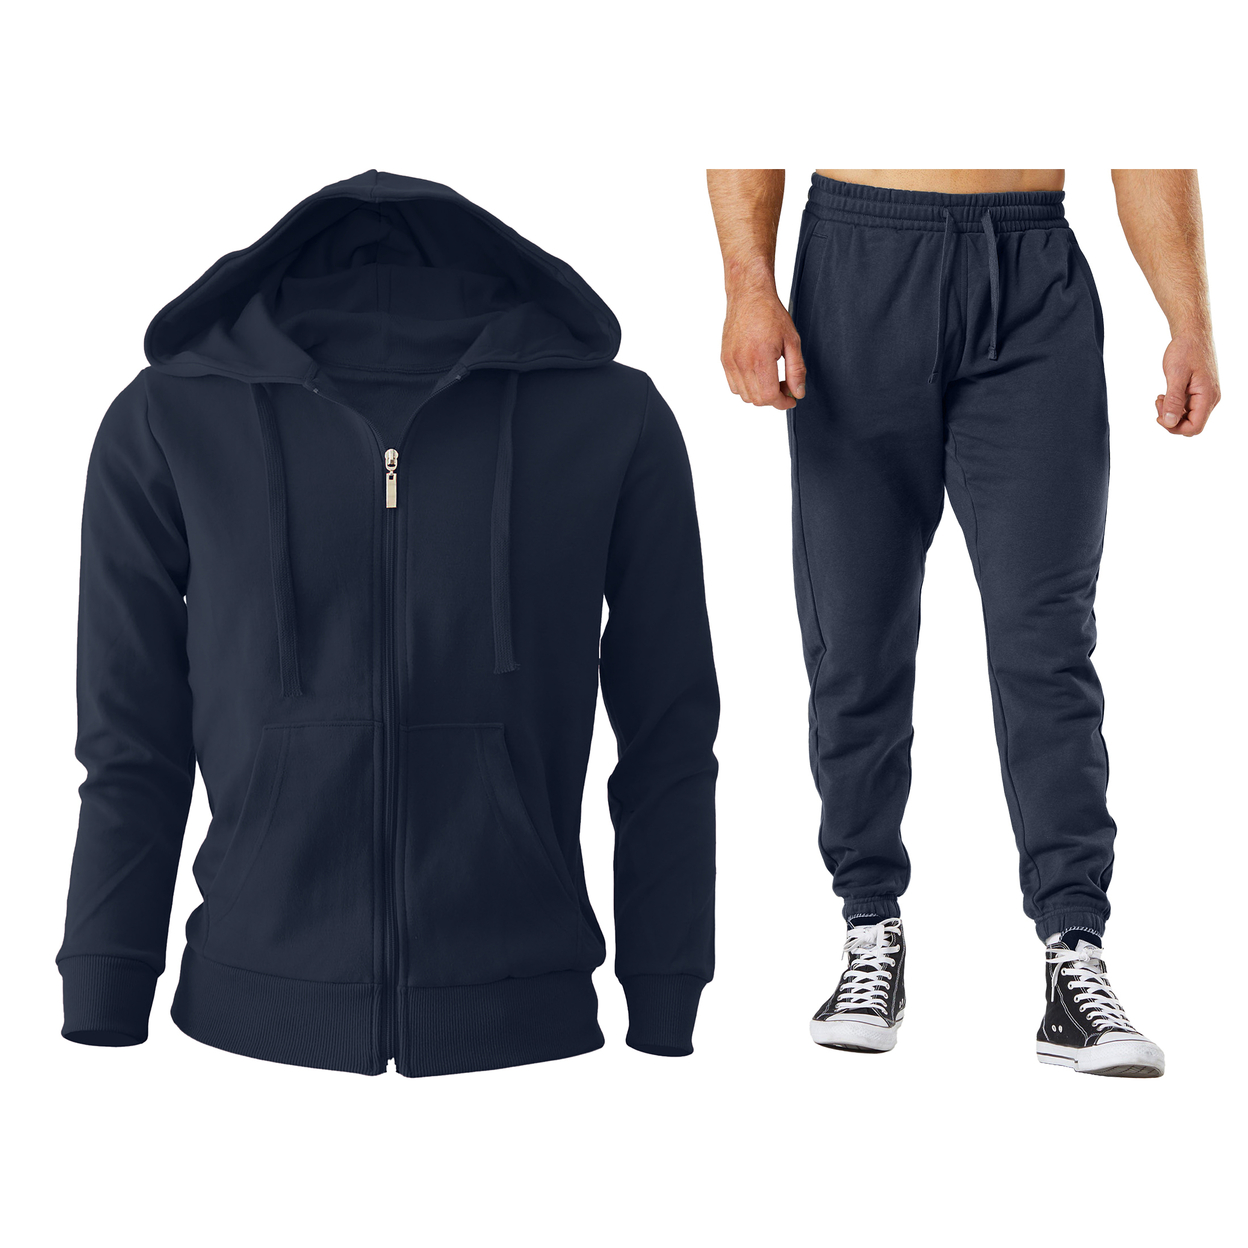 2/4-Piece: Men's Winter Warm Cozy Athletic Multi-Pockets BIG & TALL Sweatsuit Set - Navy, 1, Large